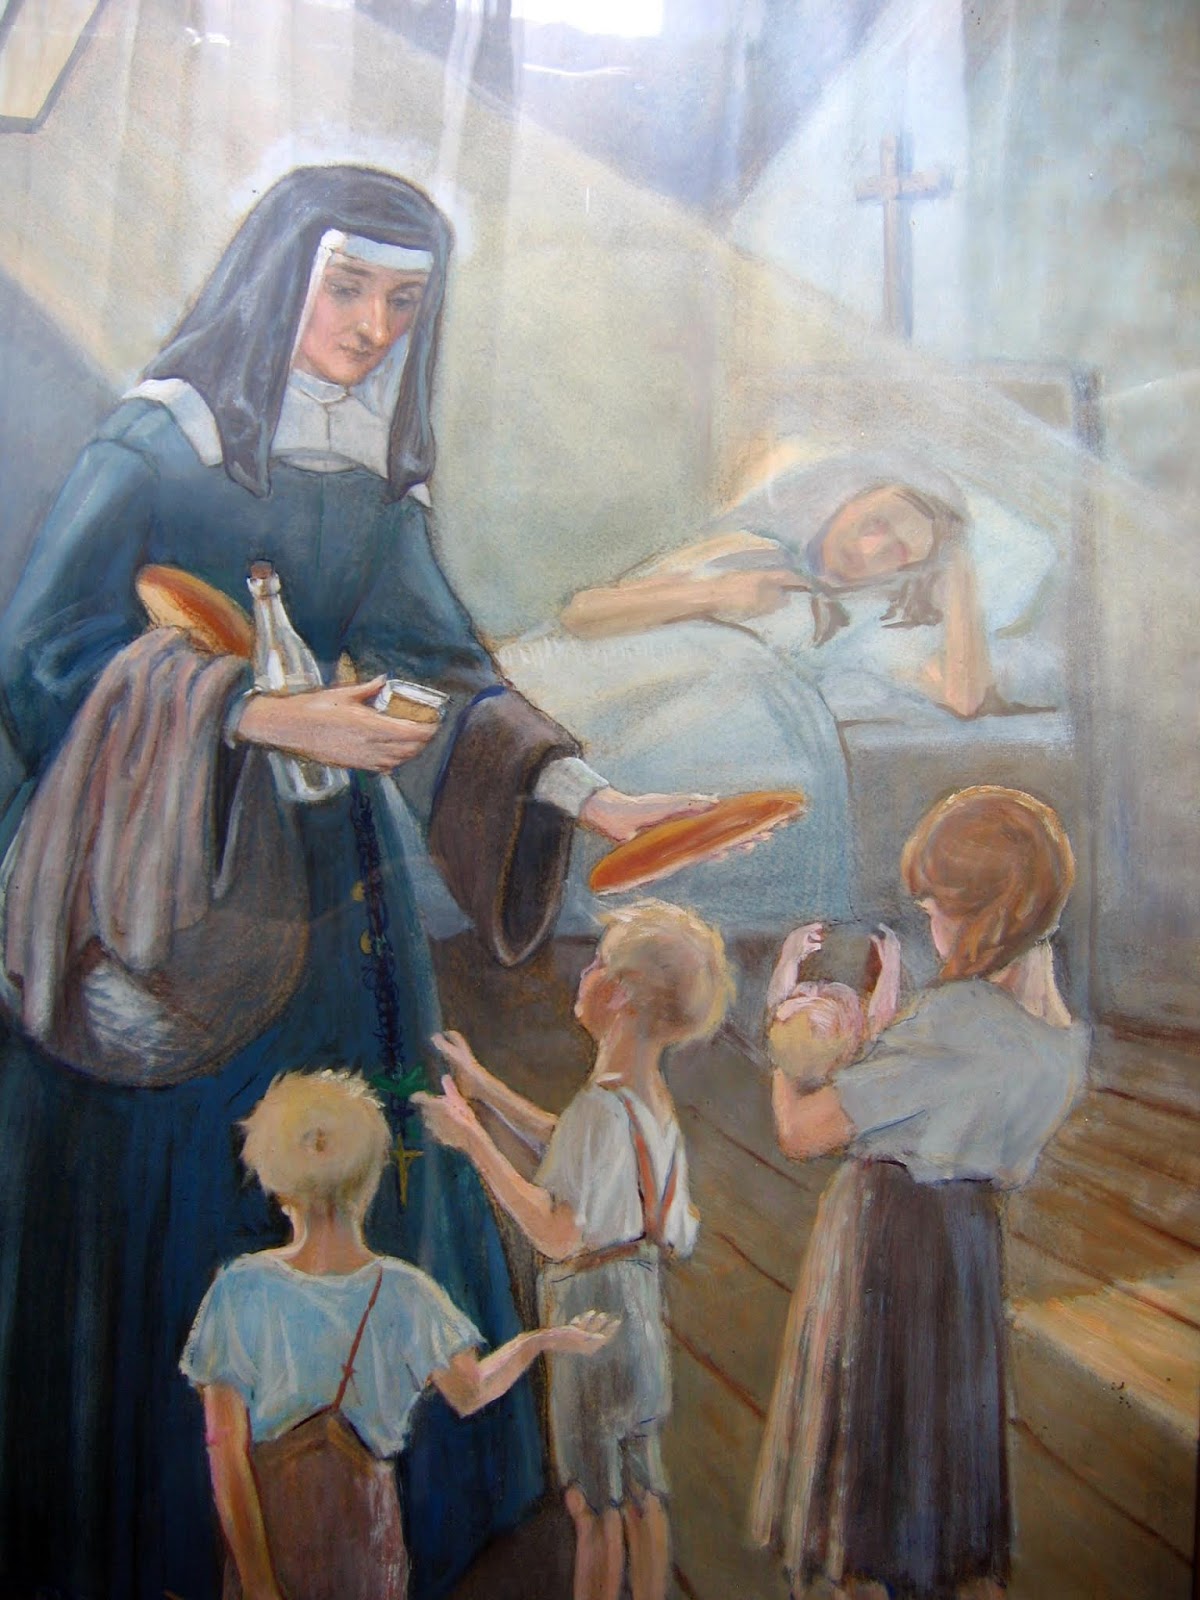 ALL SAINTS: ⛪ Saint Louise de Marillac - Wife, Mother, Widow, Foundress ...